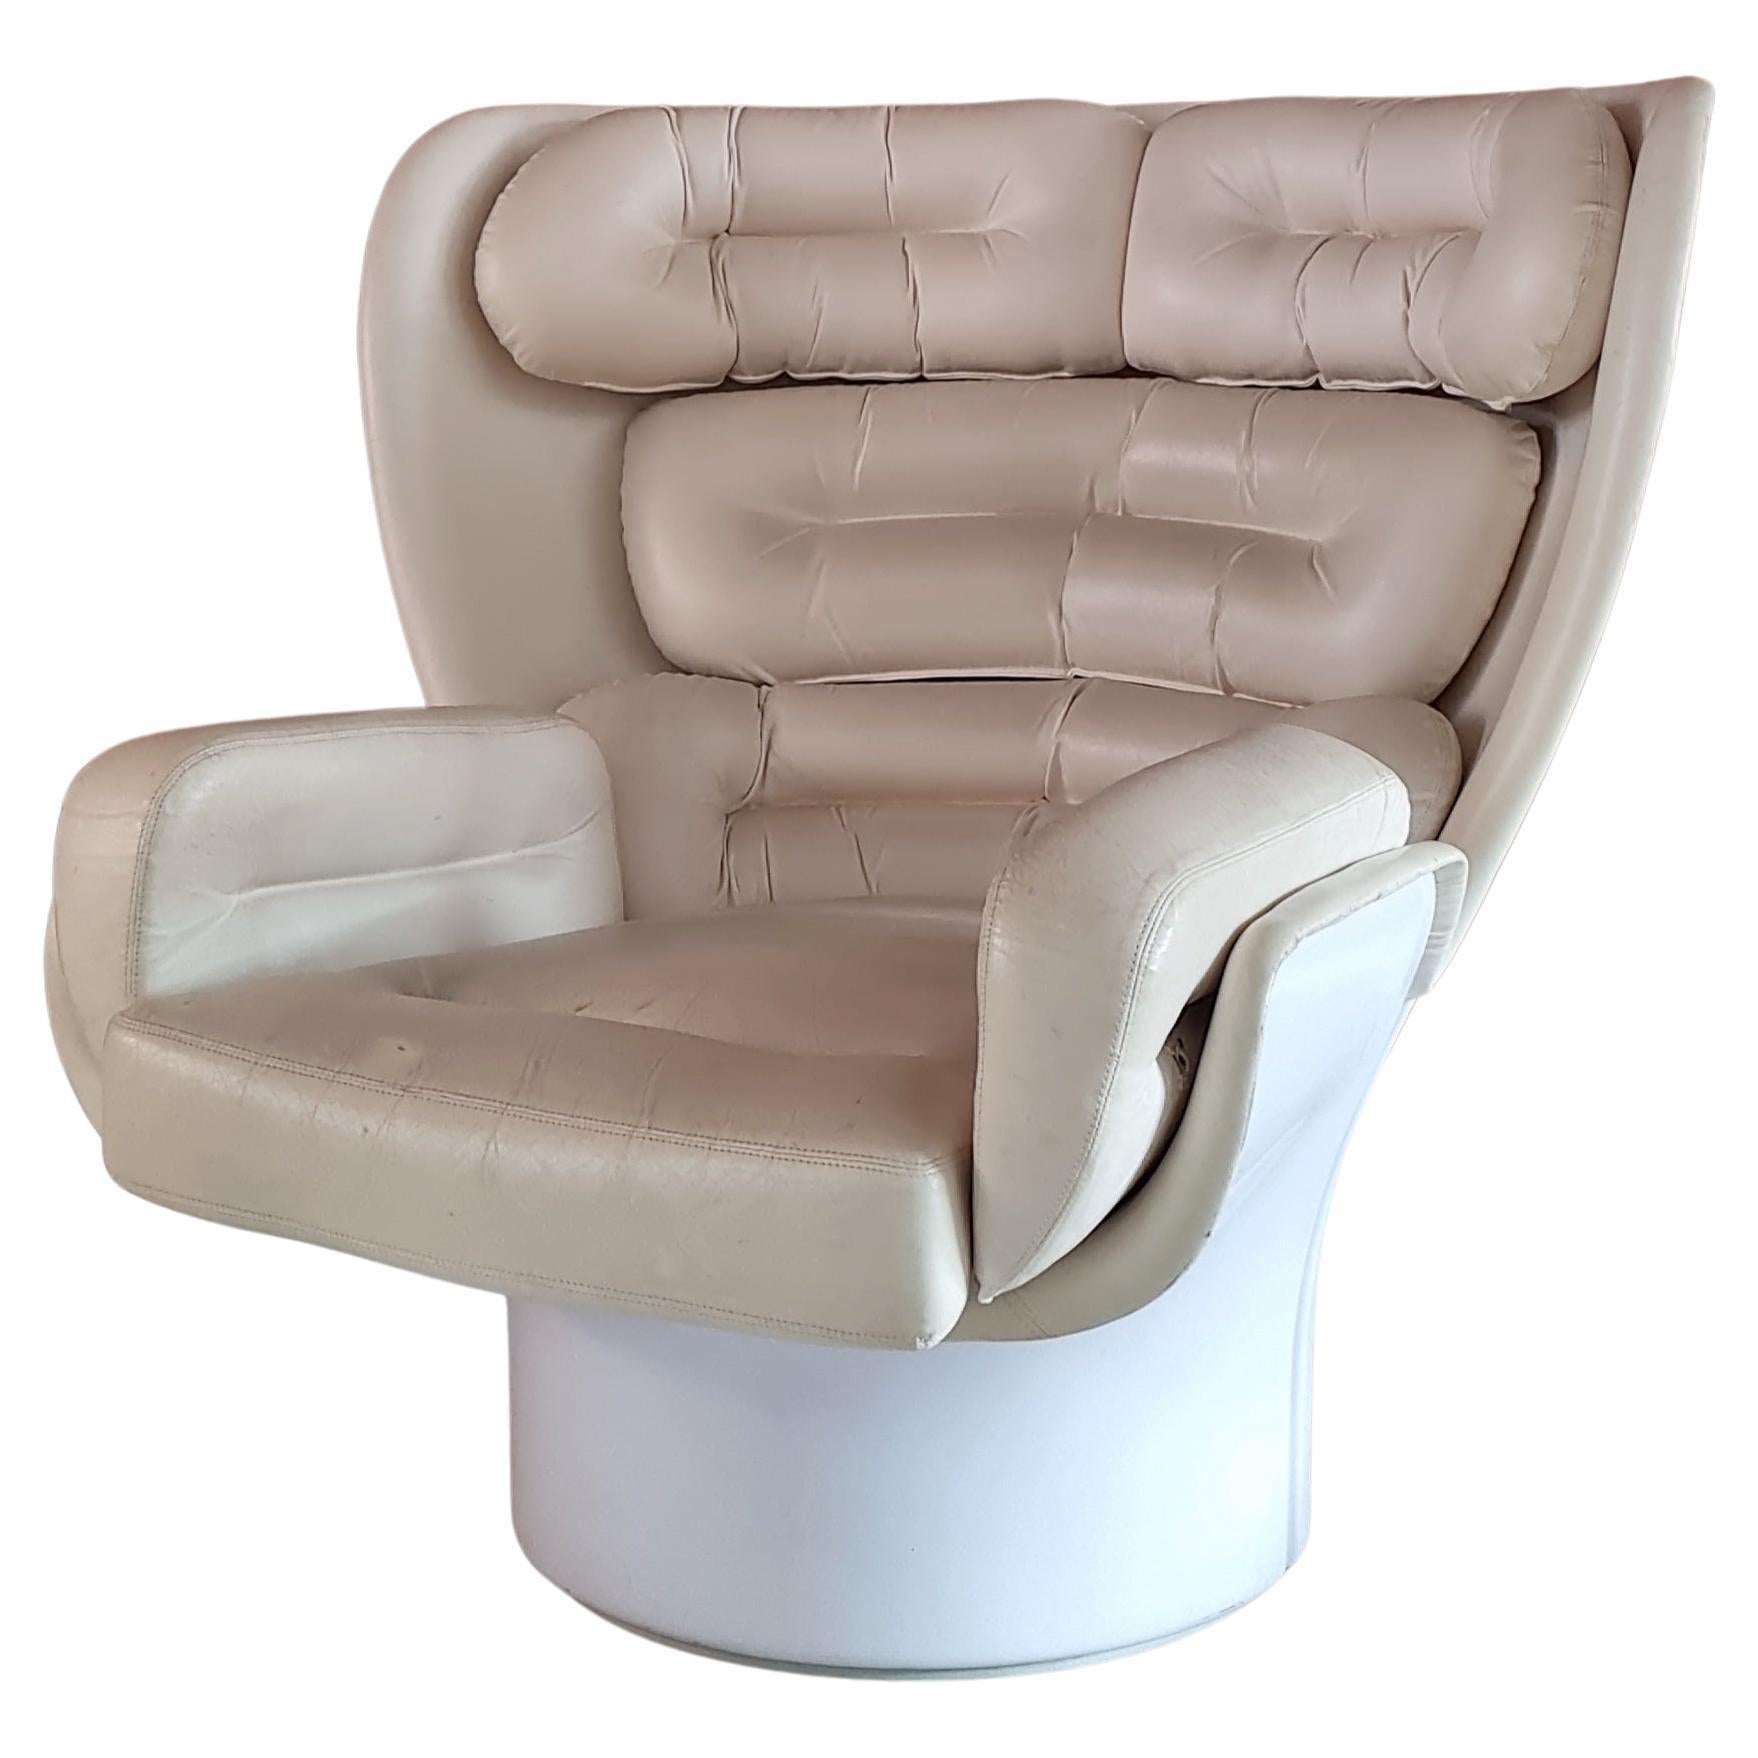 Joe Colombo ‘Elda’ Lounge Chair in White Leather and White Fiberglass